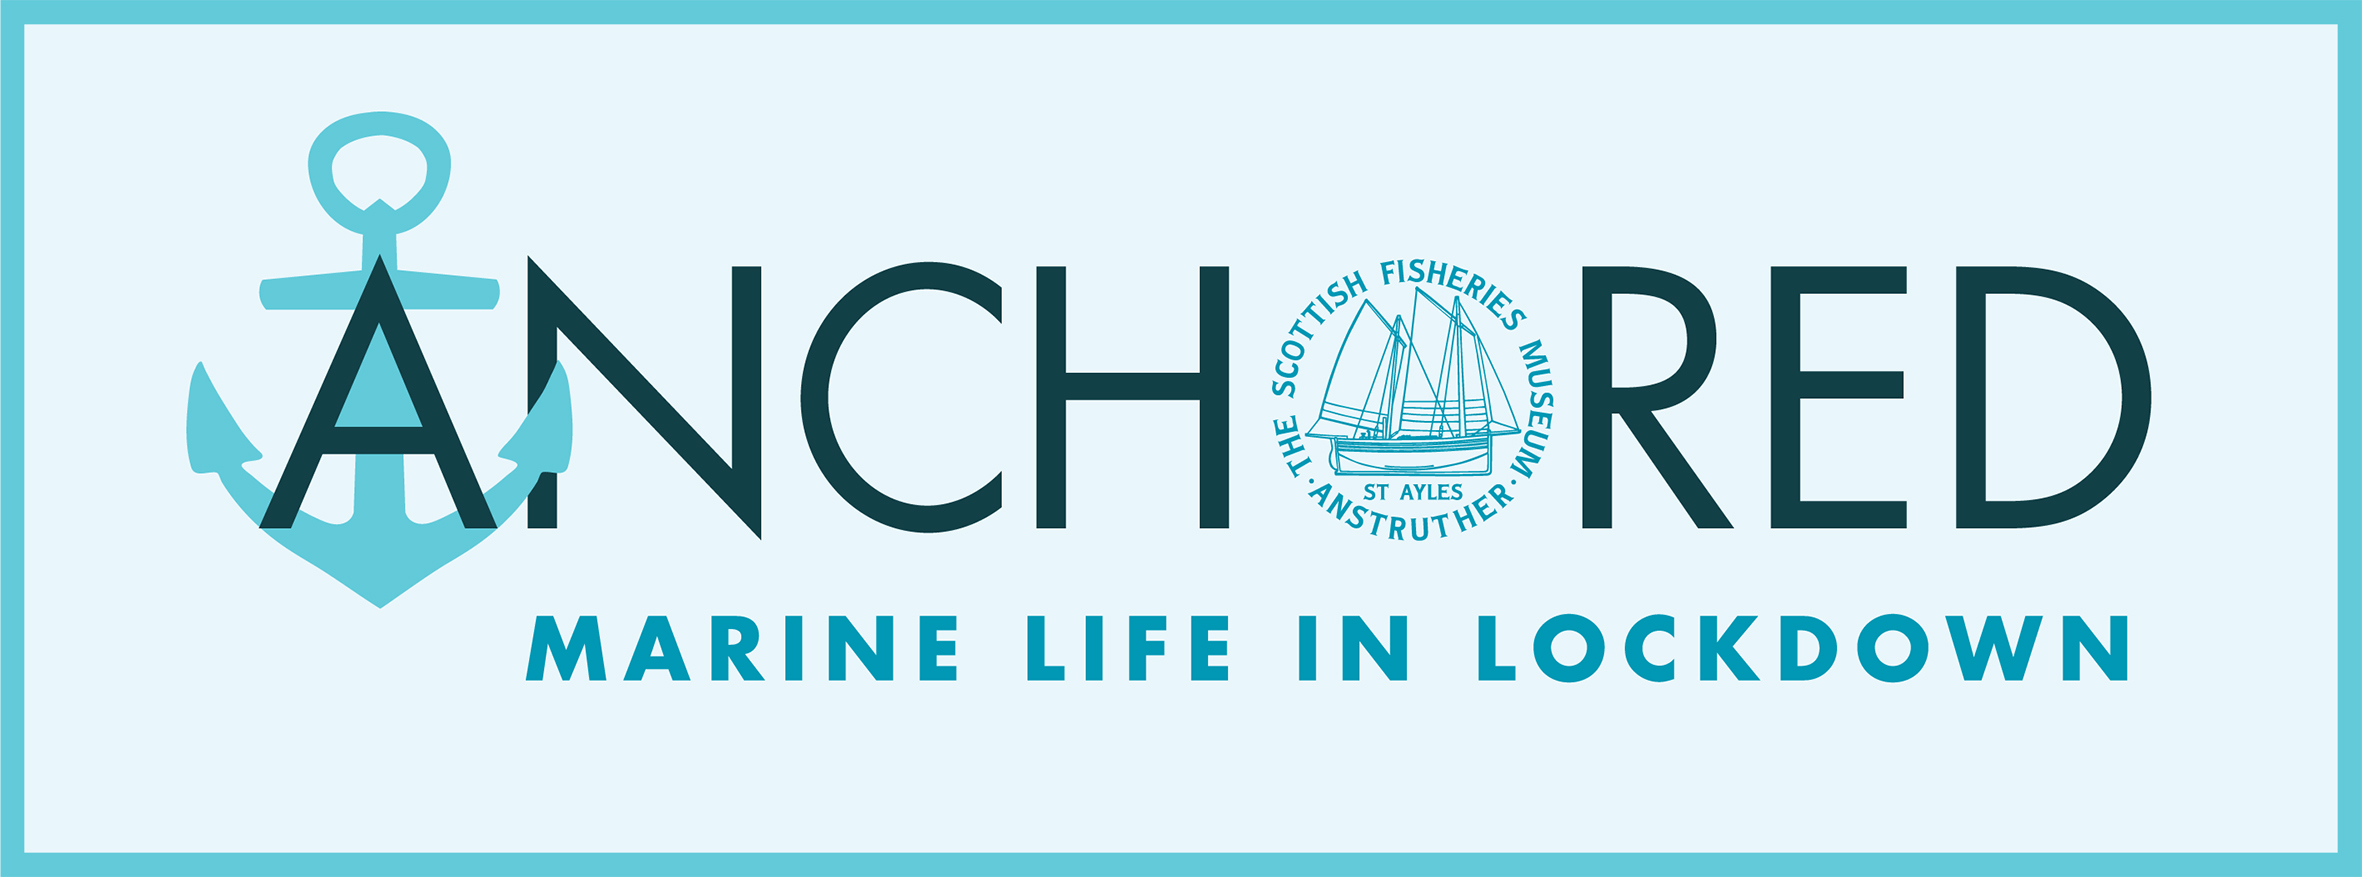 The Scottish Fisheries Museum Presents 'Anchored: Marine Life in Lockdown'